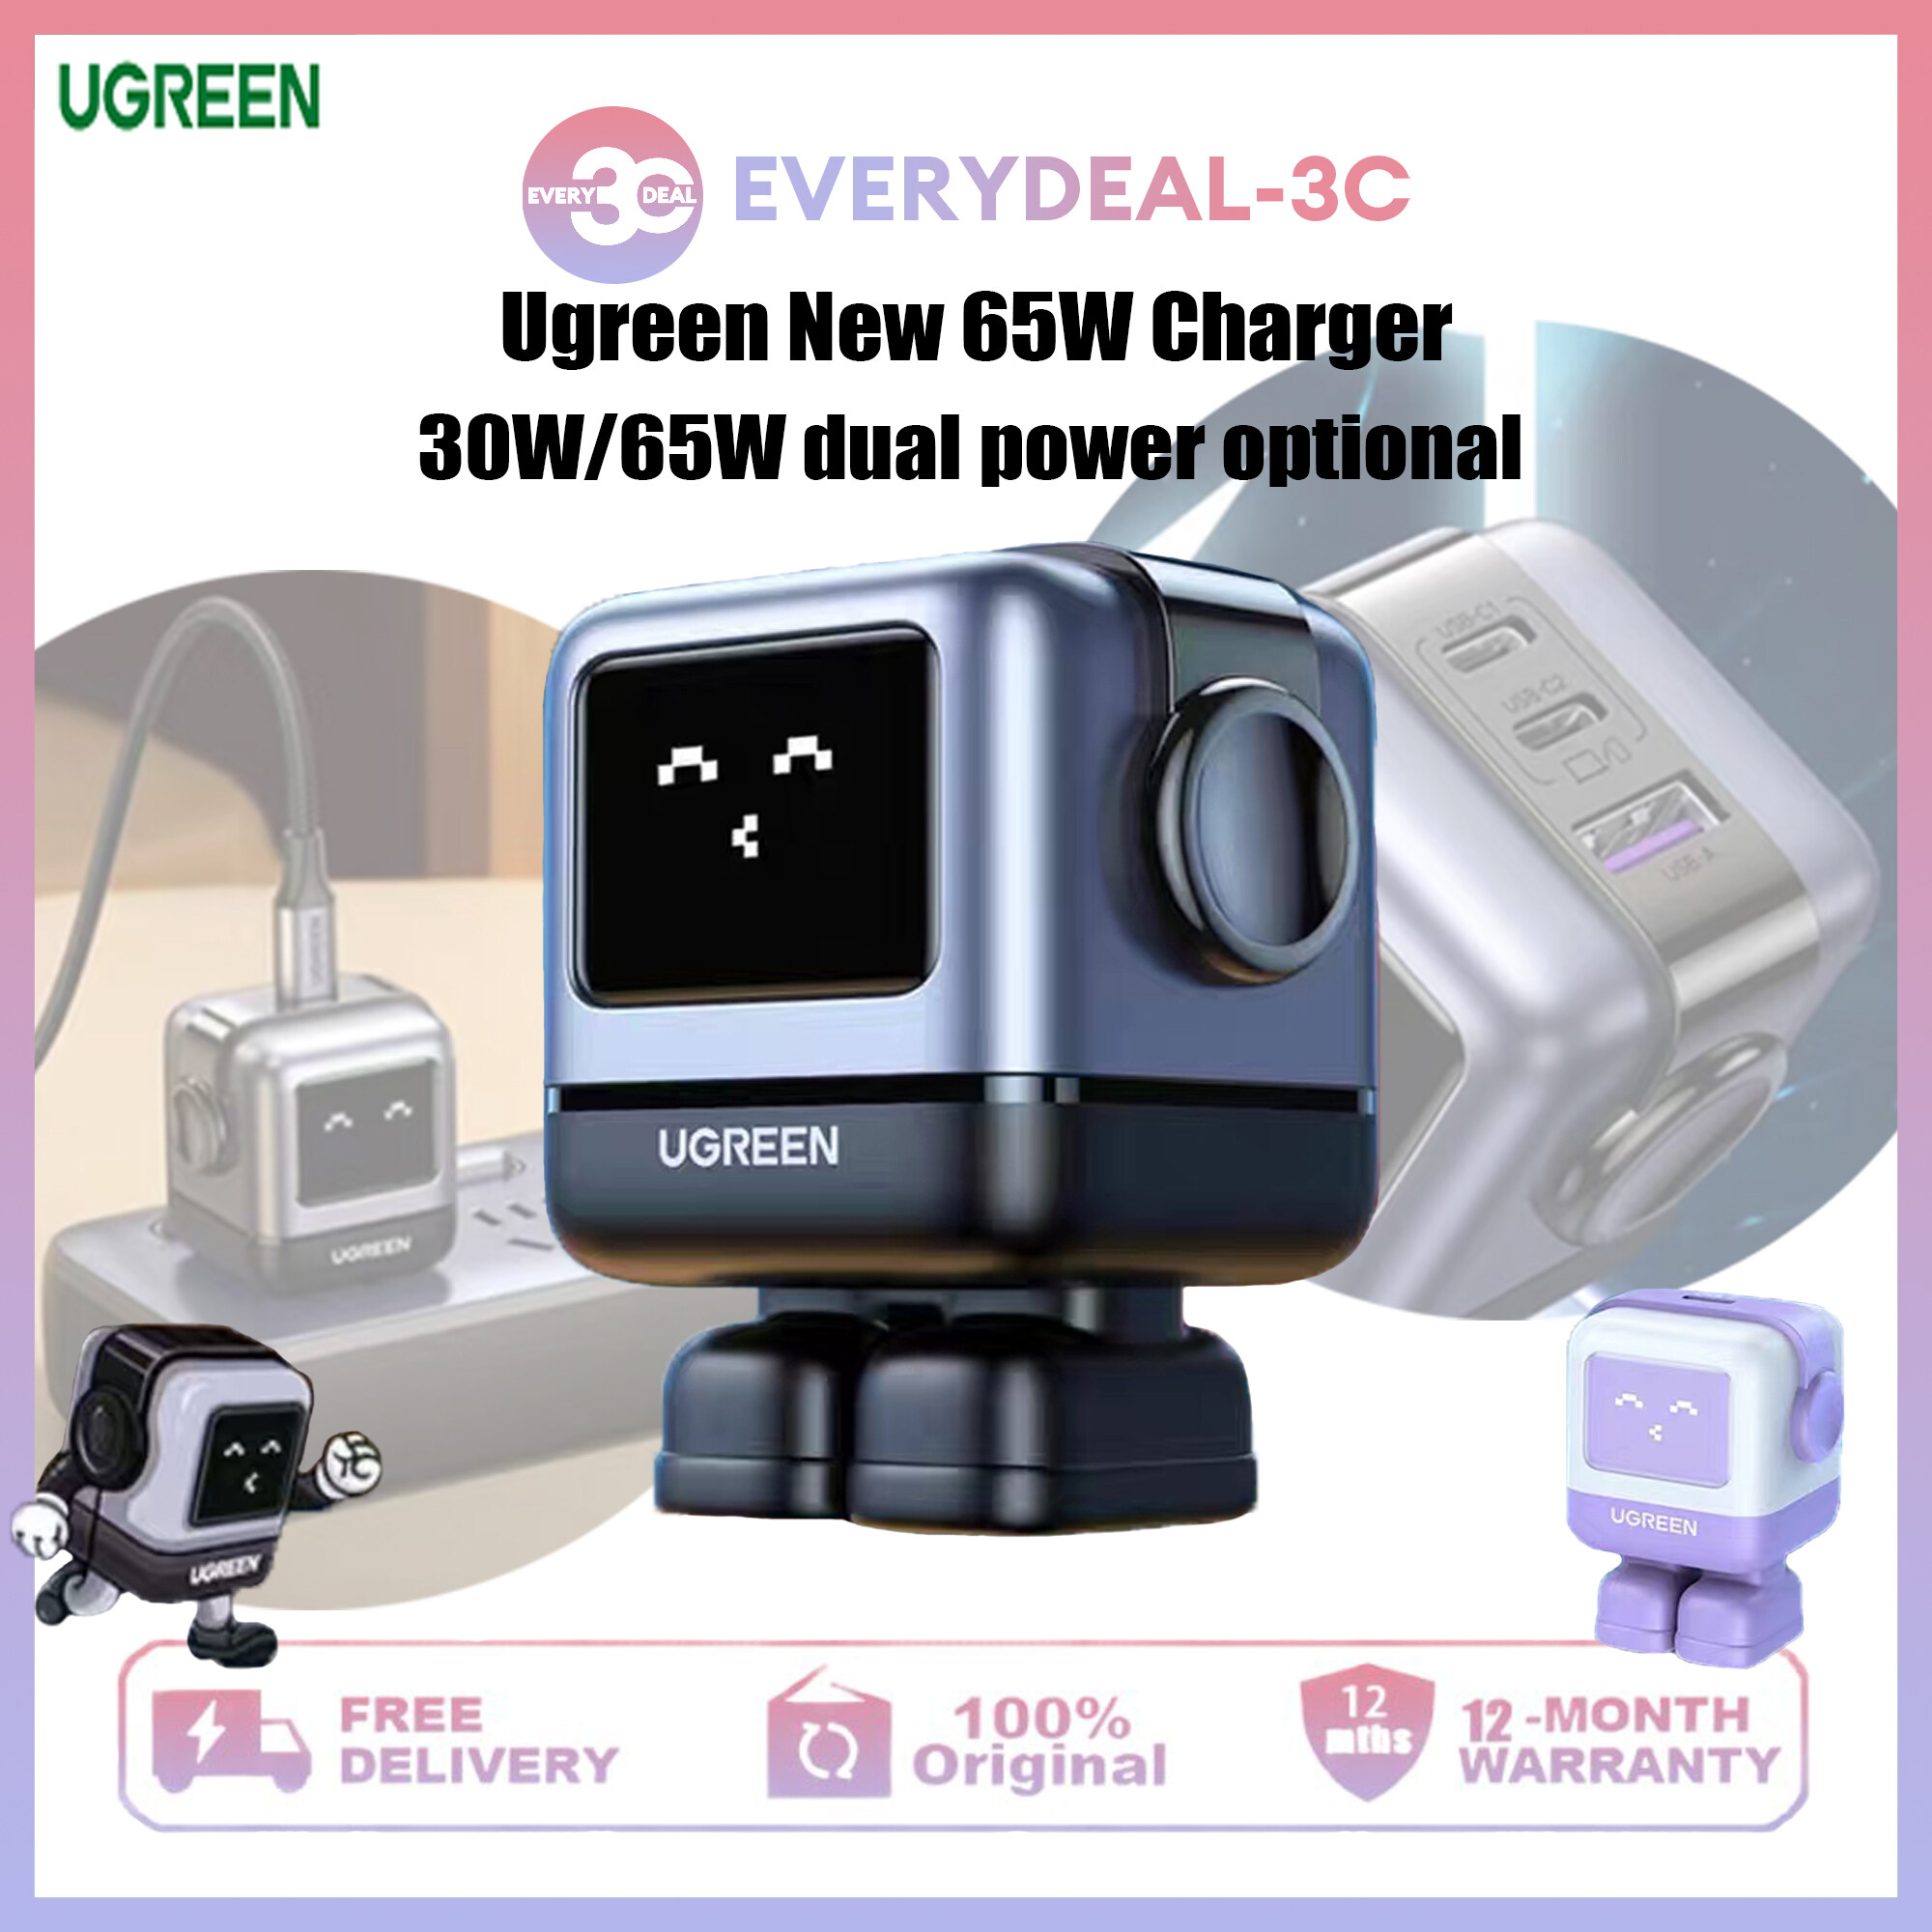 Ugreen CD244/10334 Nexode 65W USB C GaN Charger-3 Ports Wall